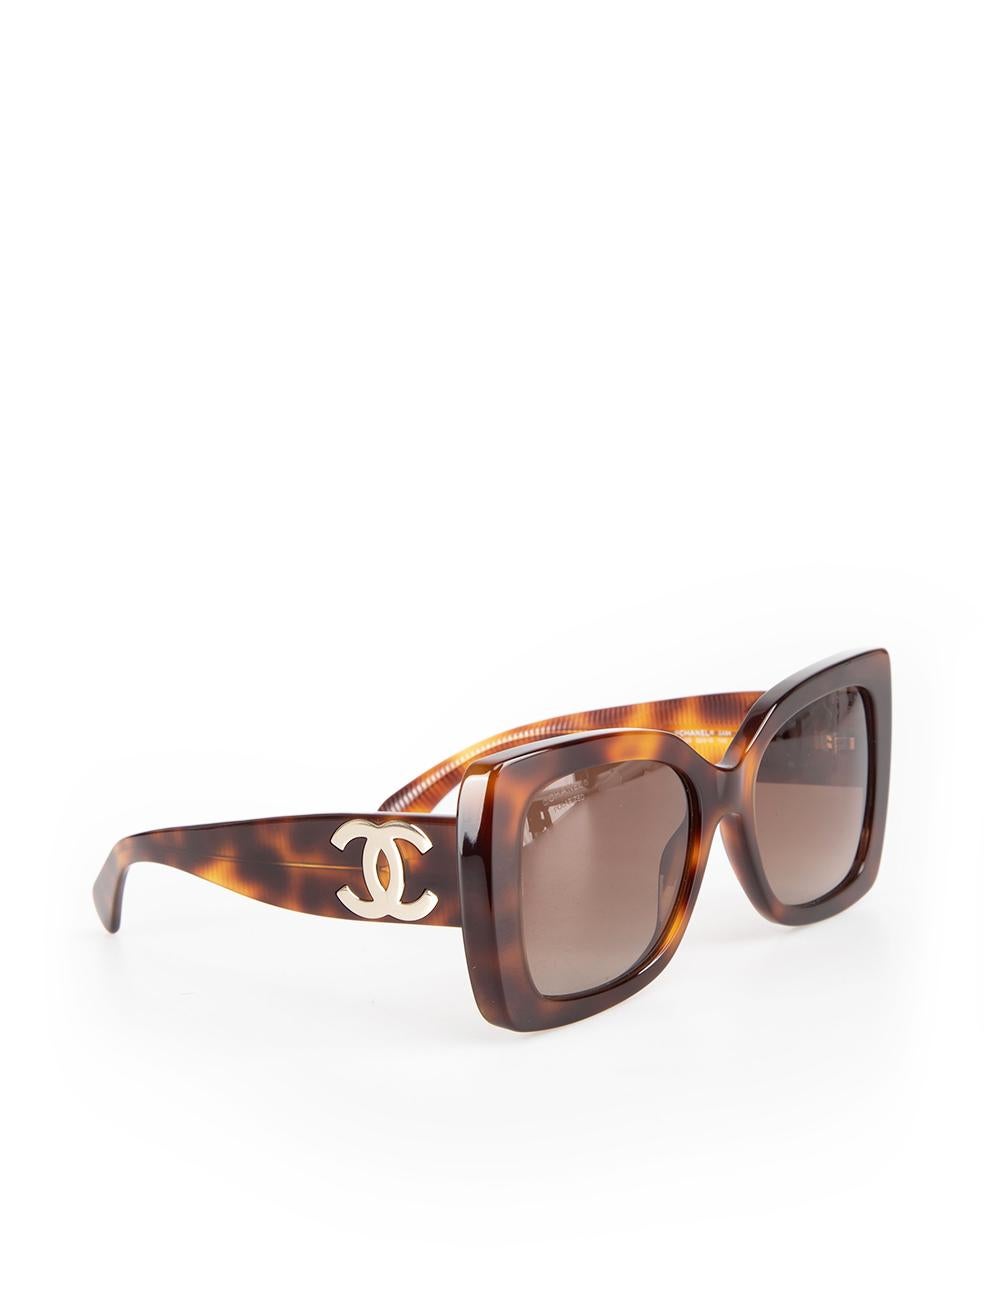 Chanel Brown Tortoiseshell Square CC Logo Sunglasses In New Condition For Sale In London, GB